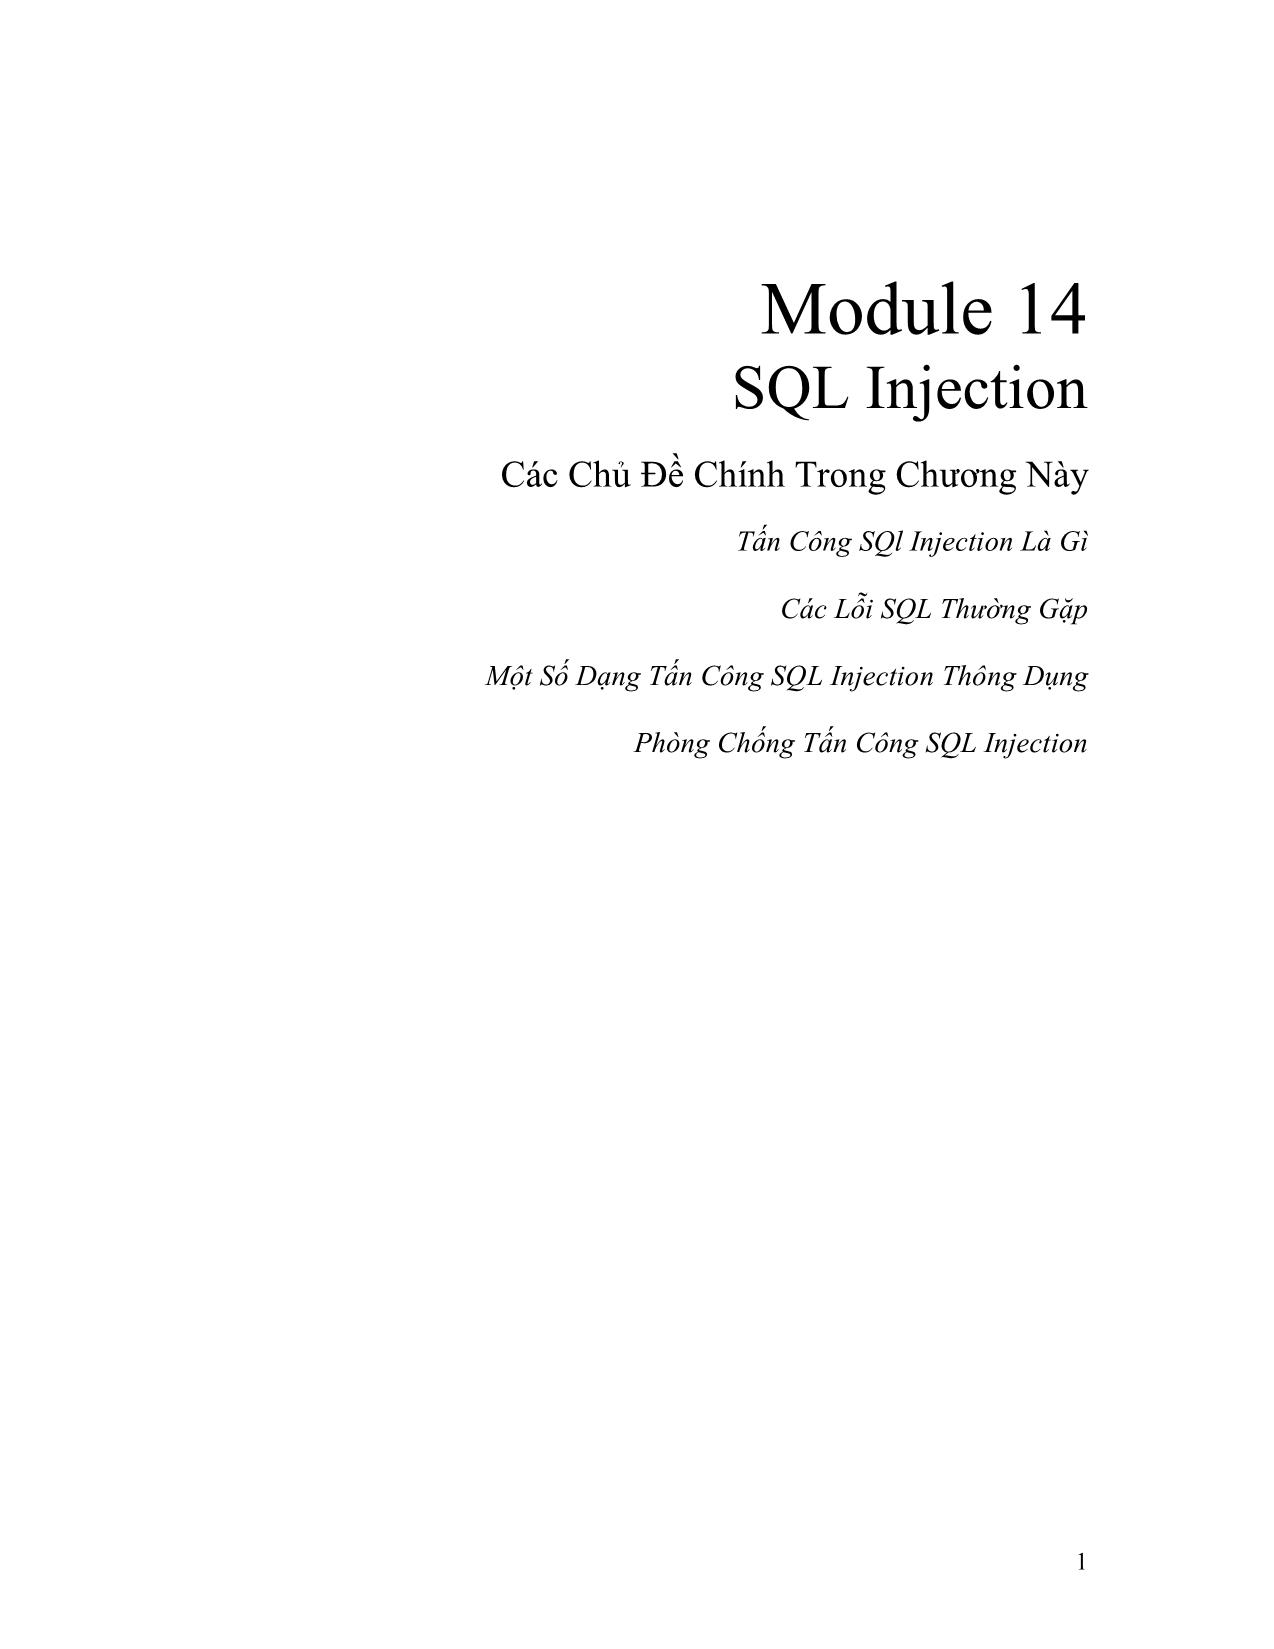 Module 14: SQL Injection trang 1